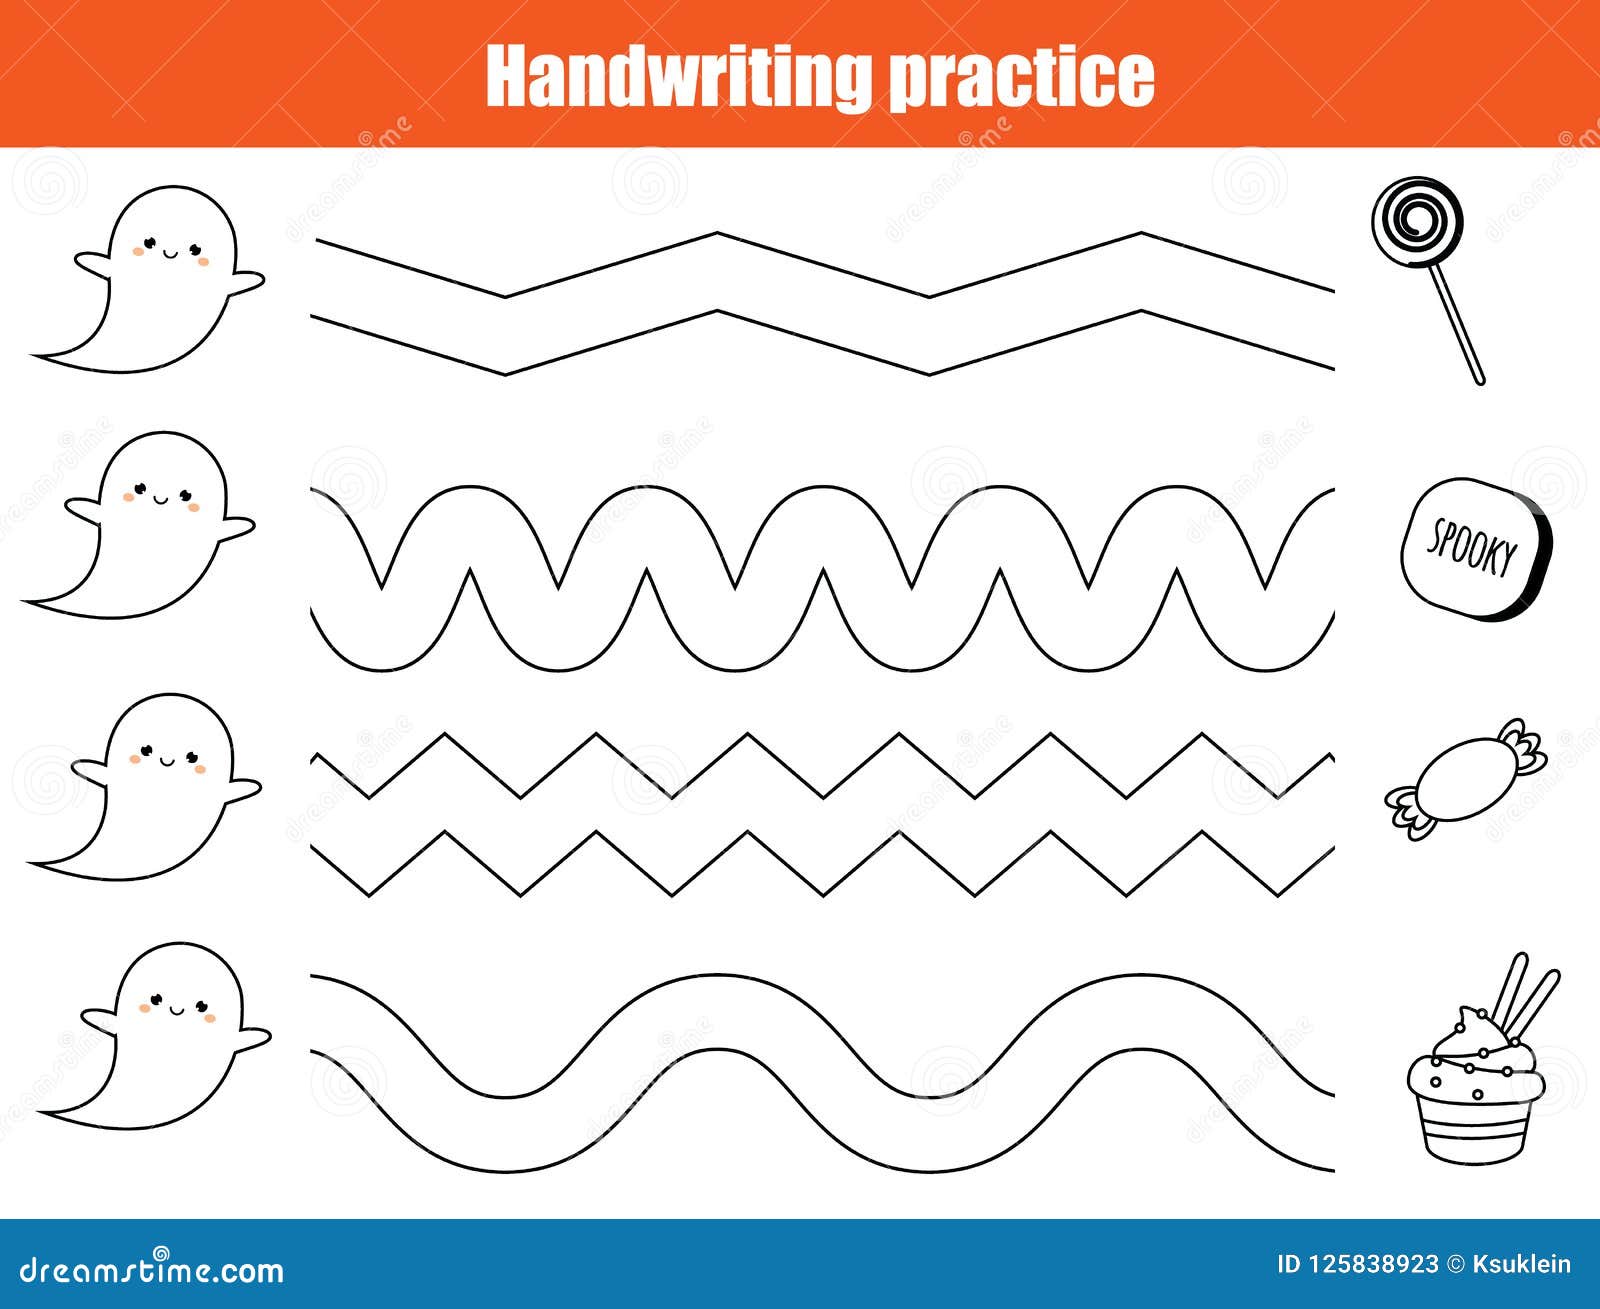 handwriting practice for kids